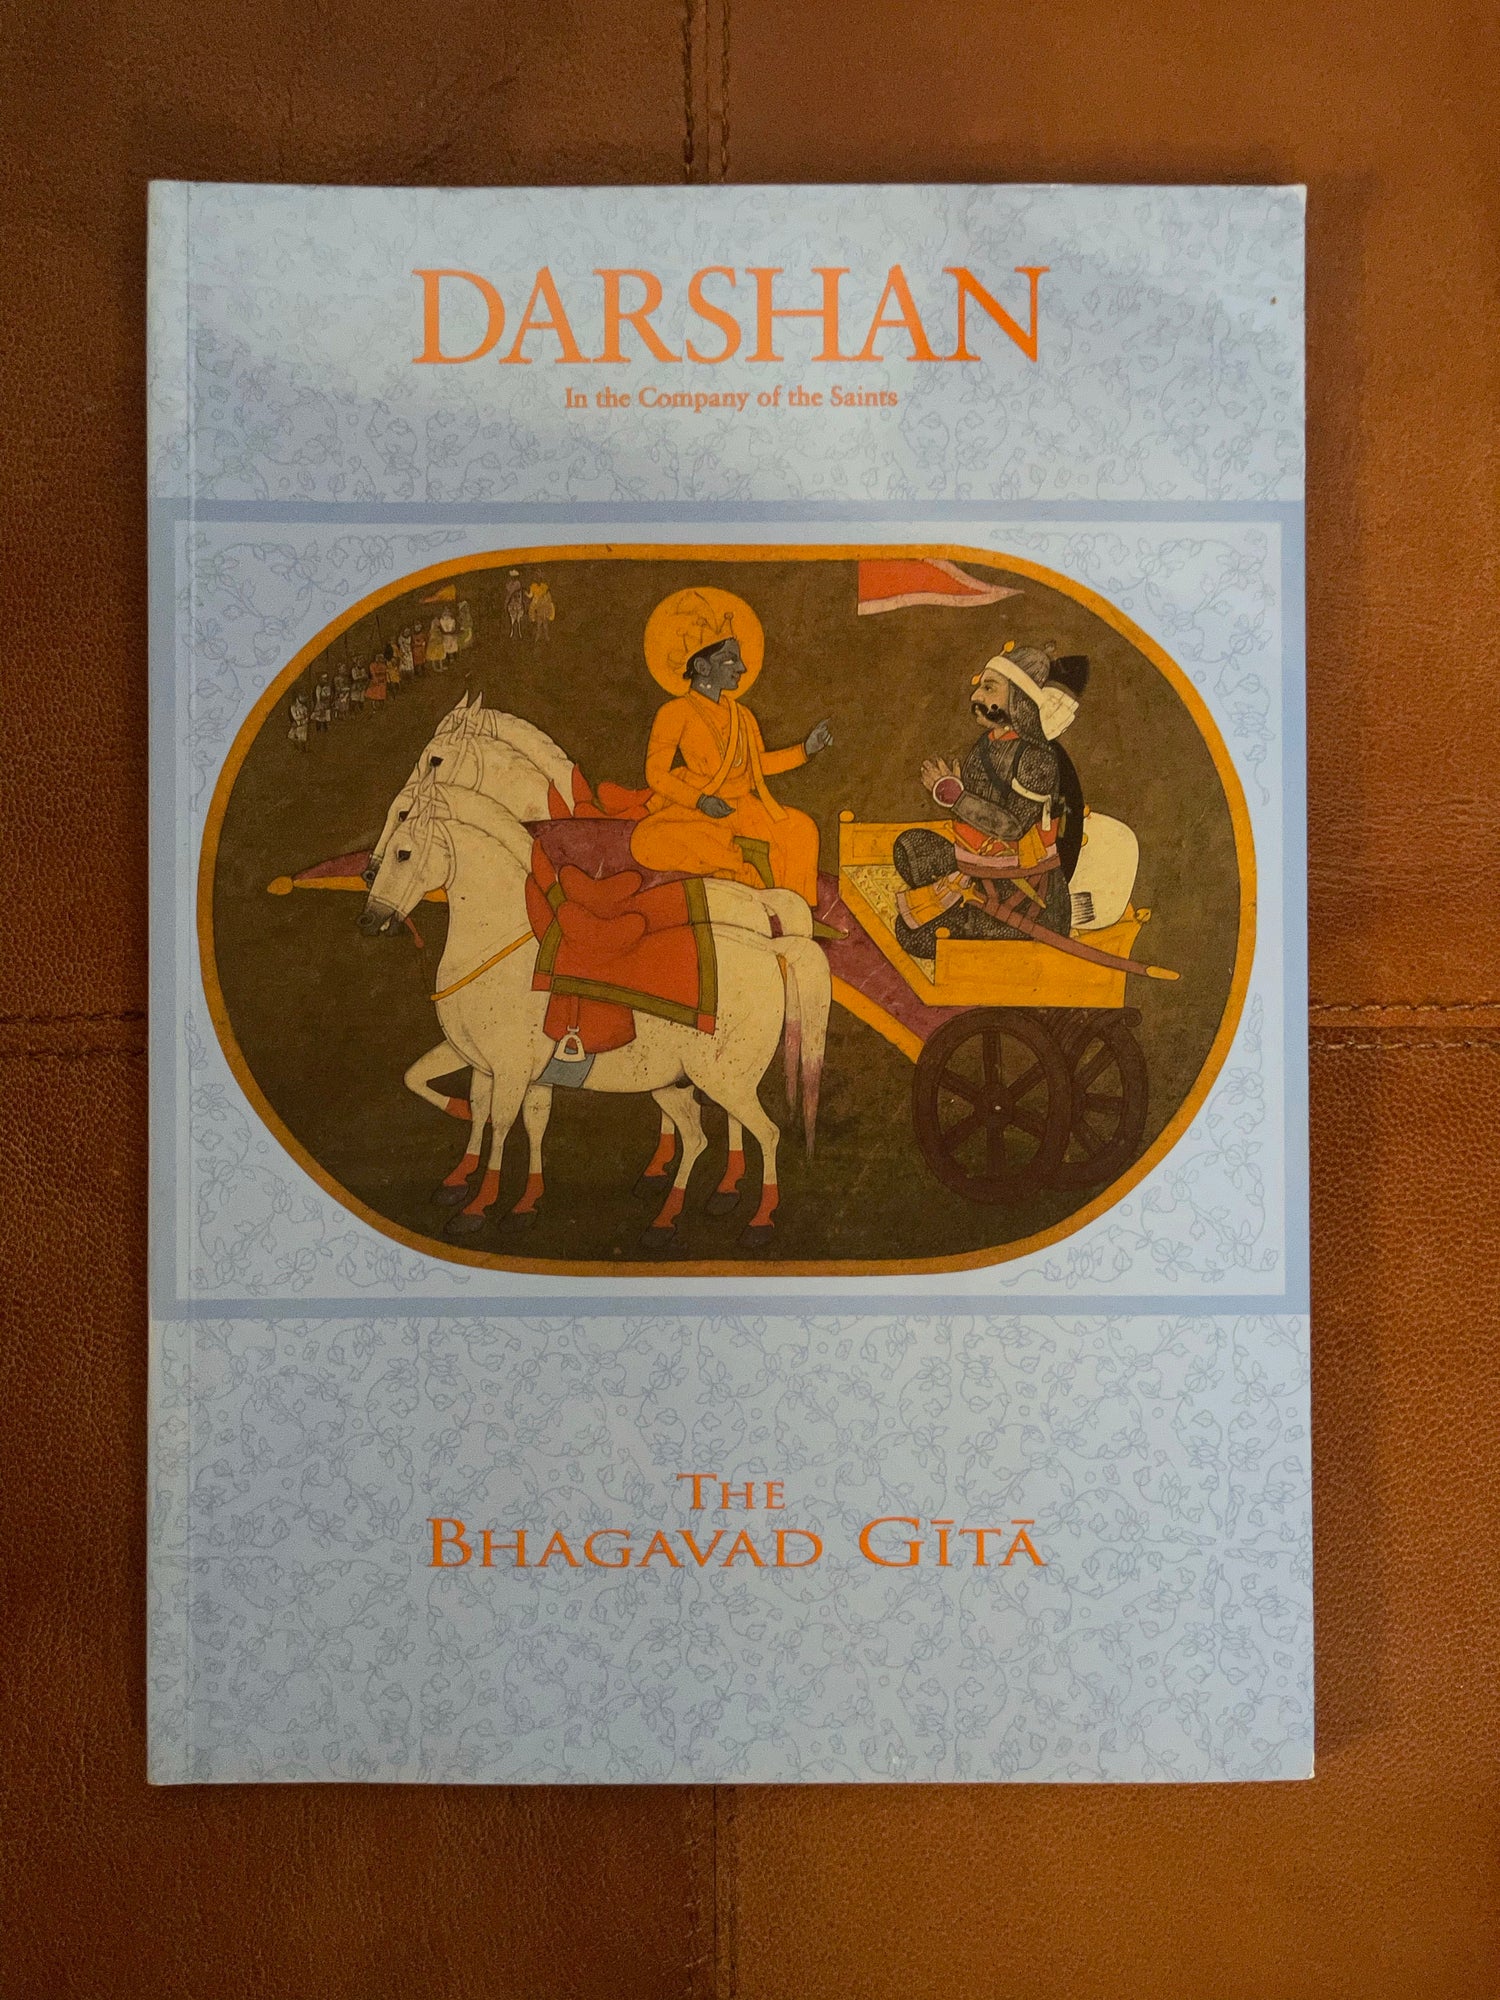 Darshan Magazine, In The Company of The Saints, The Bhagavad Gita